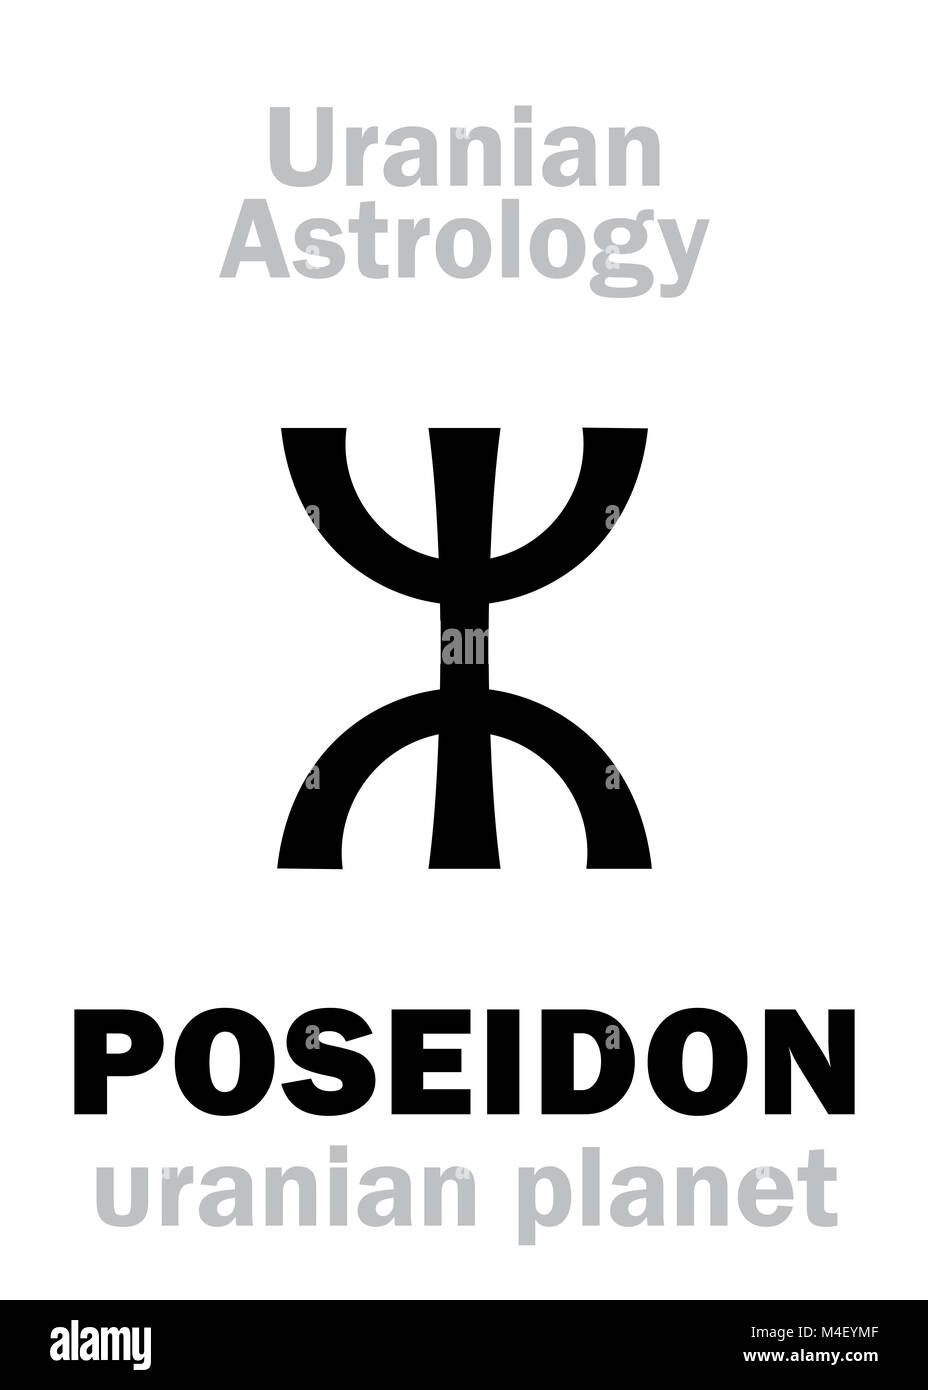 Astrologia: POSEIDON (uranian pianeta) Foto Stock